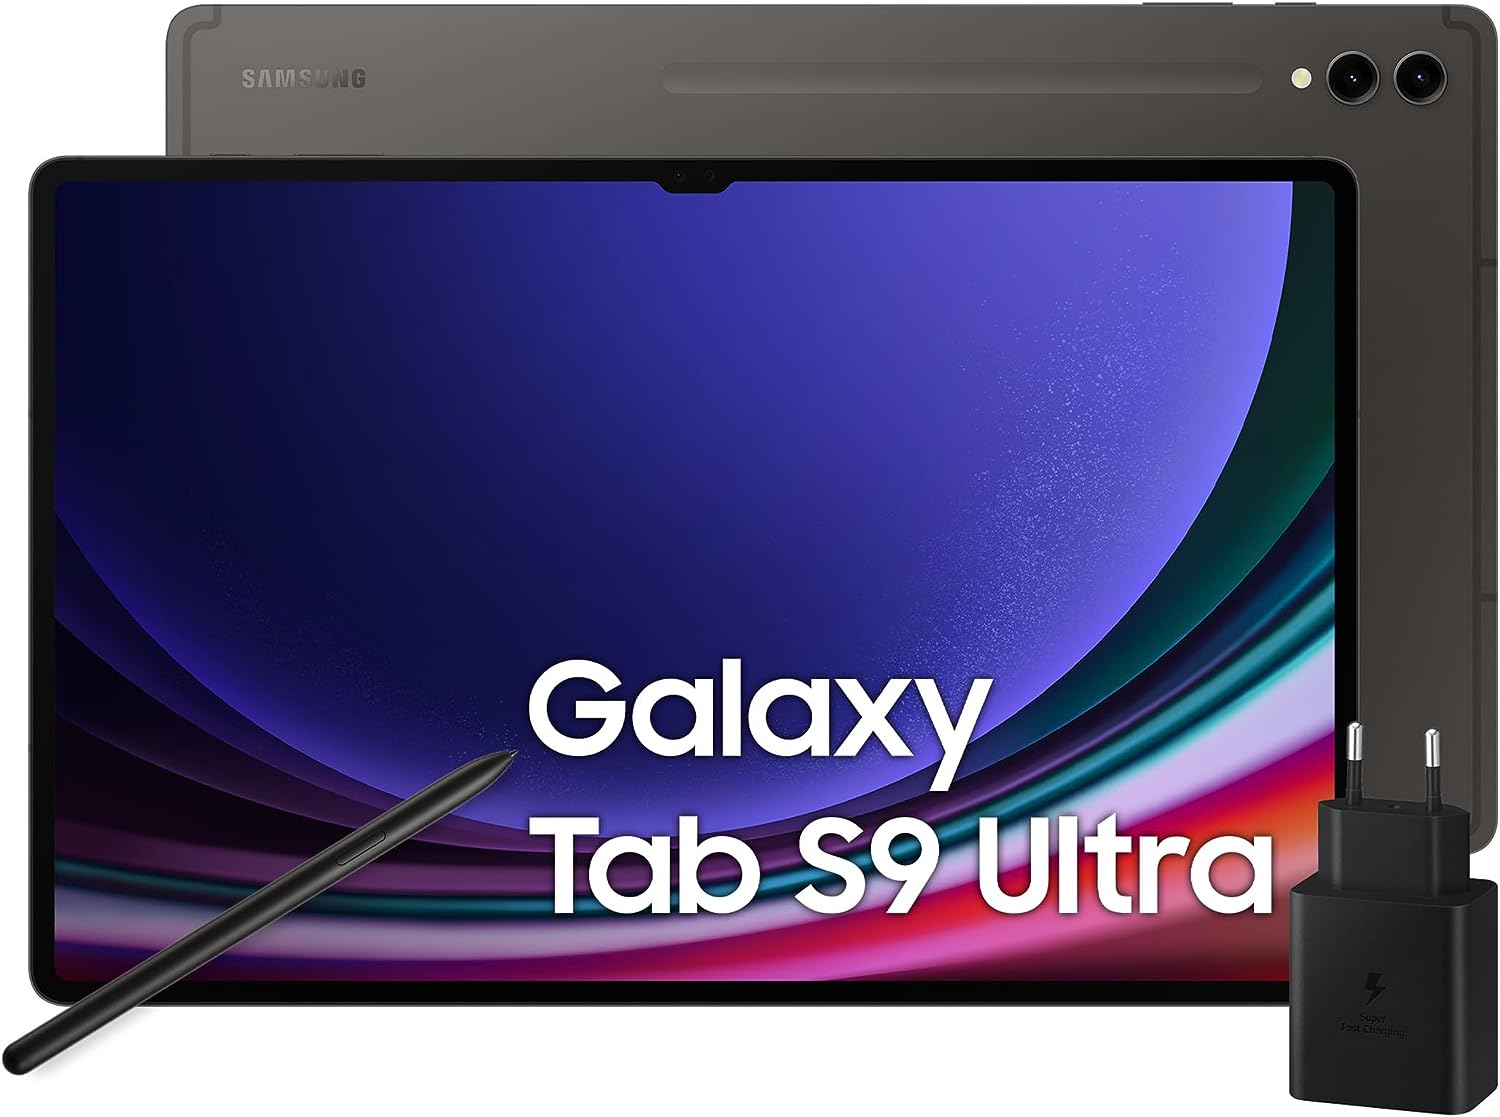 Samsung svela I tablet Galaxy Tab S9, Galaxy Tab S9+ e Galaxy Tab S9 Ultra